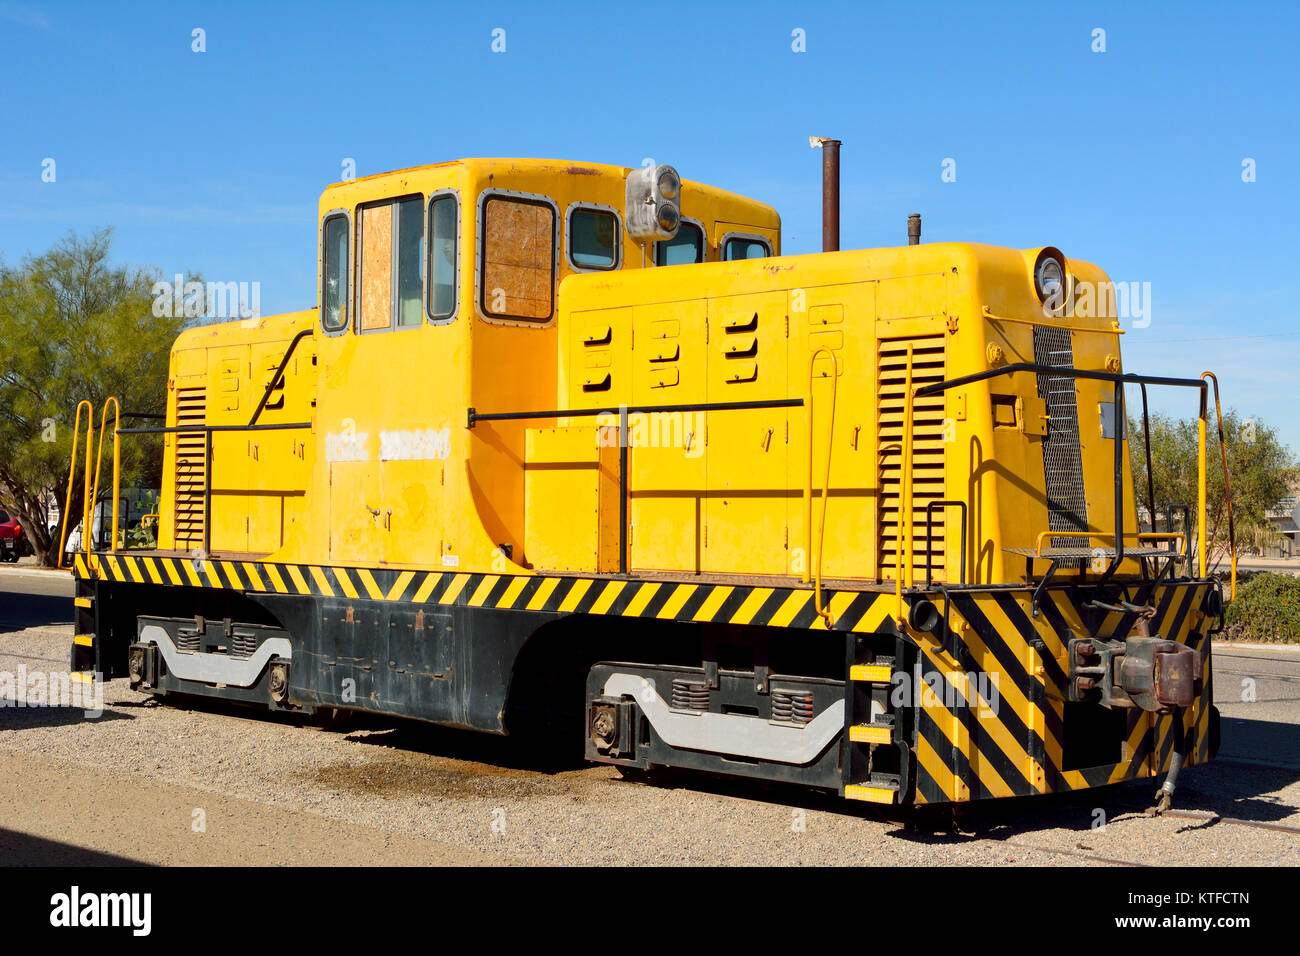 Barstow, California, United States of America - November 26, 2017. Historic locomotive along railroad tracks in Barstow, CA. Stock Photo